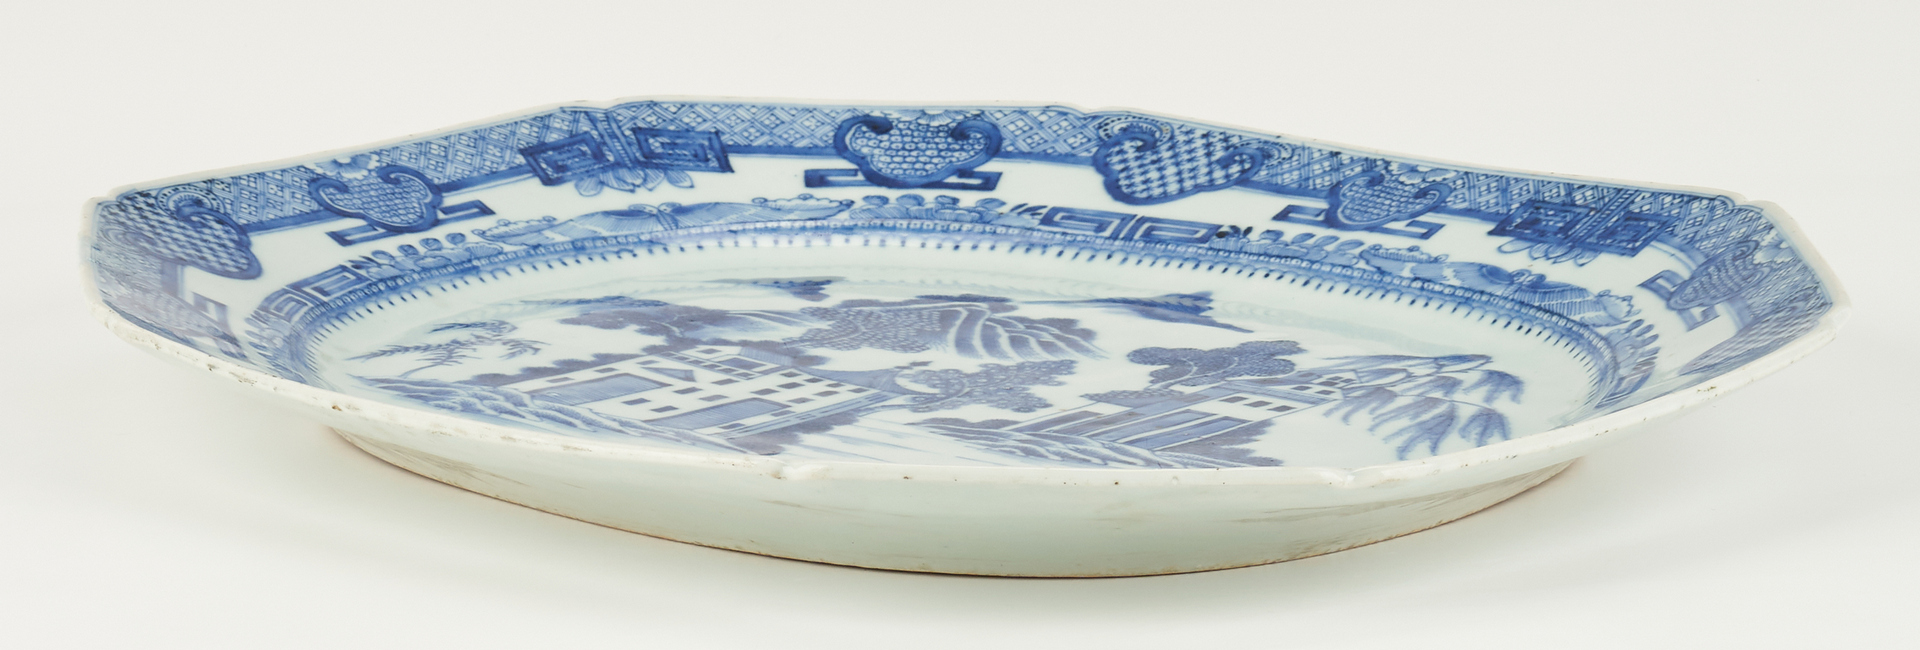 Lot 14: Chinese Blue & White Export Tureen + Platter